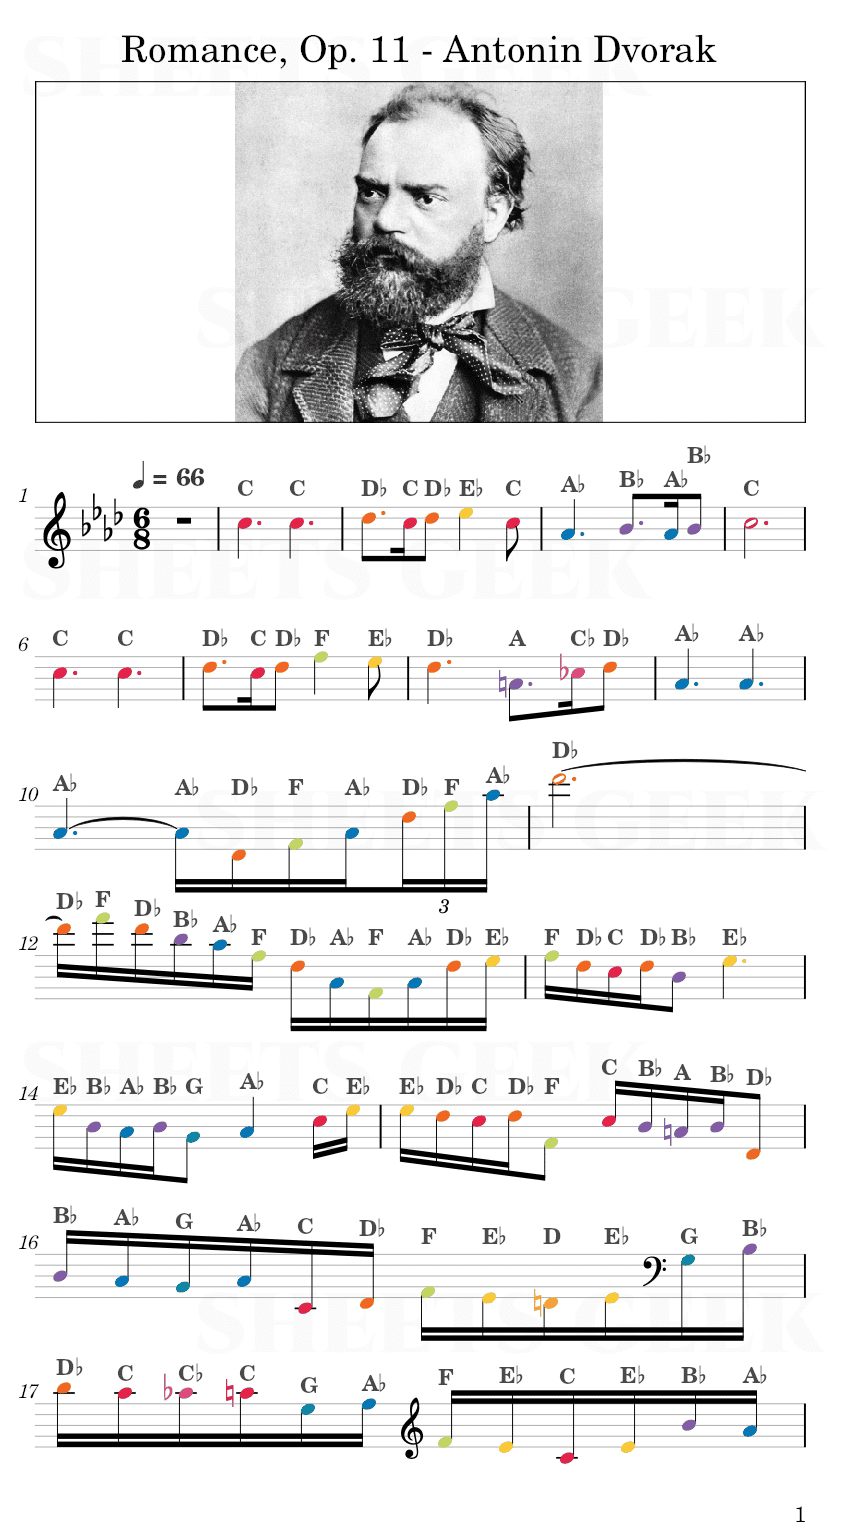 Romance, Op. 11 - Antonin Dvorak Easy Sheet Music Free for piano, keyboard, flute, violin, sax, cello page 1